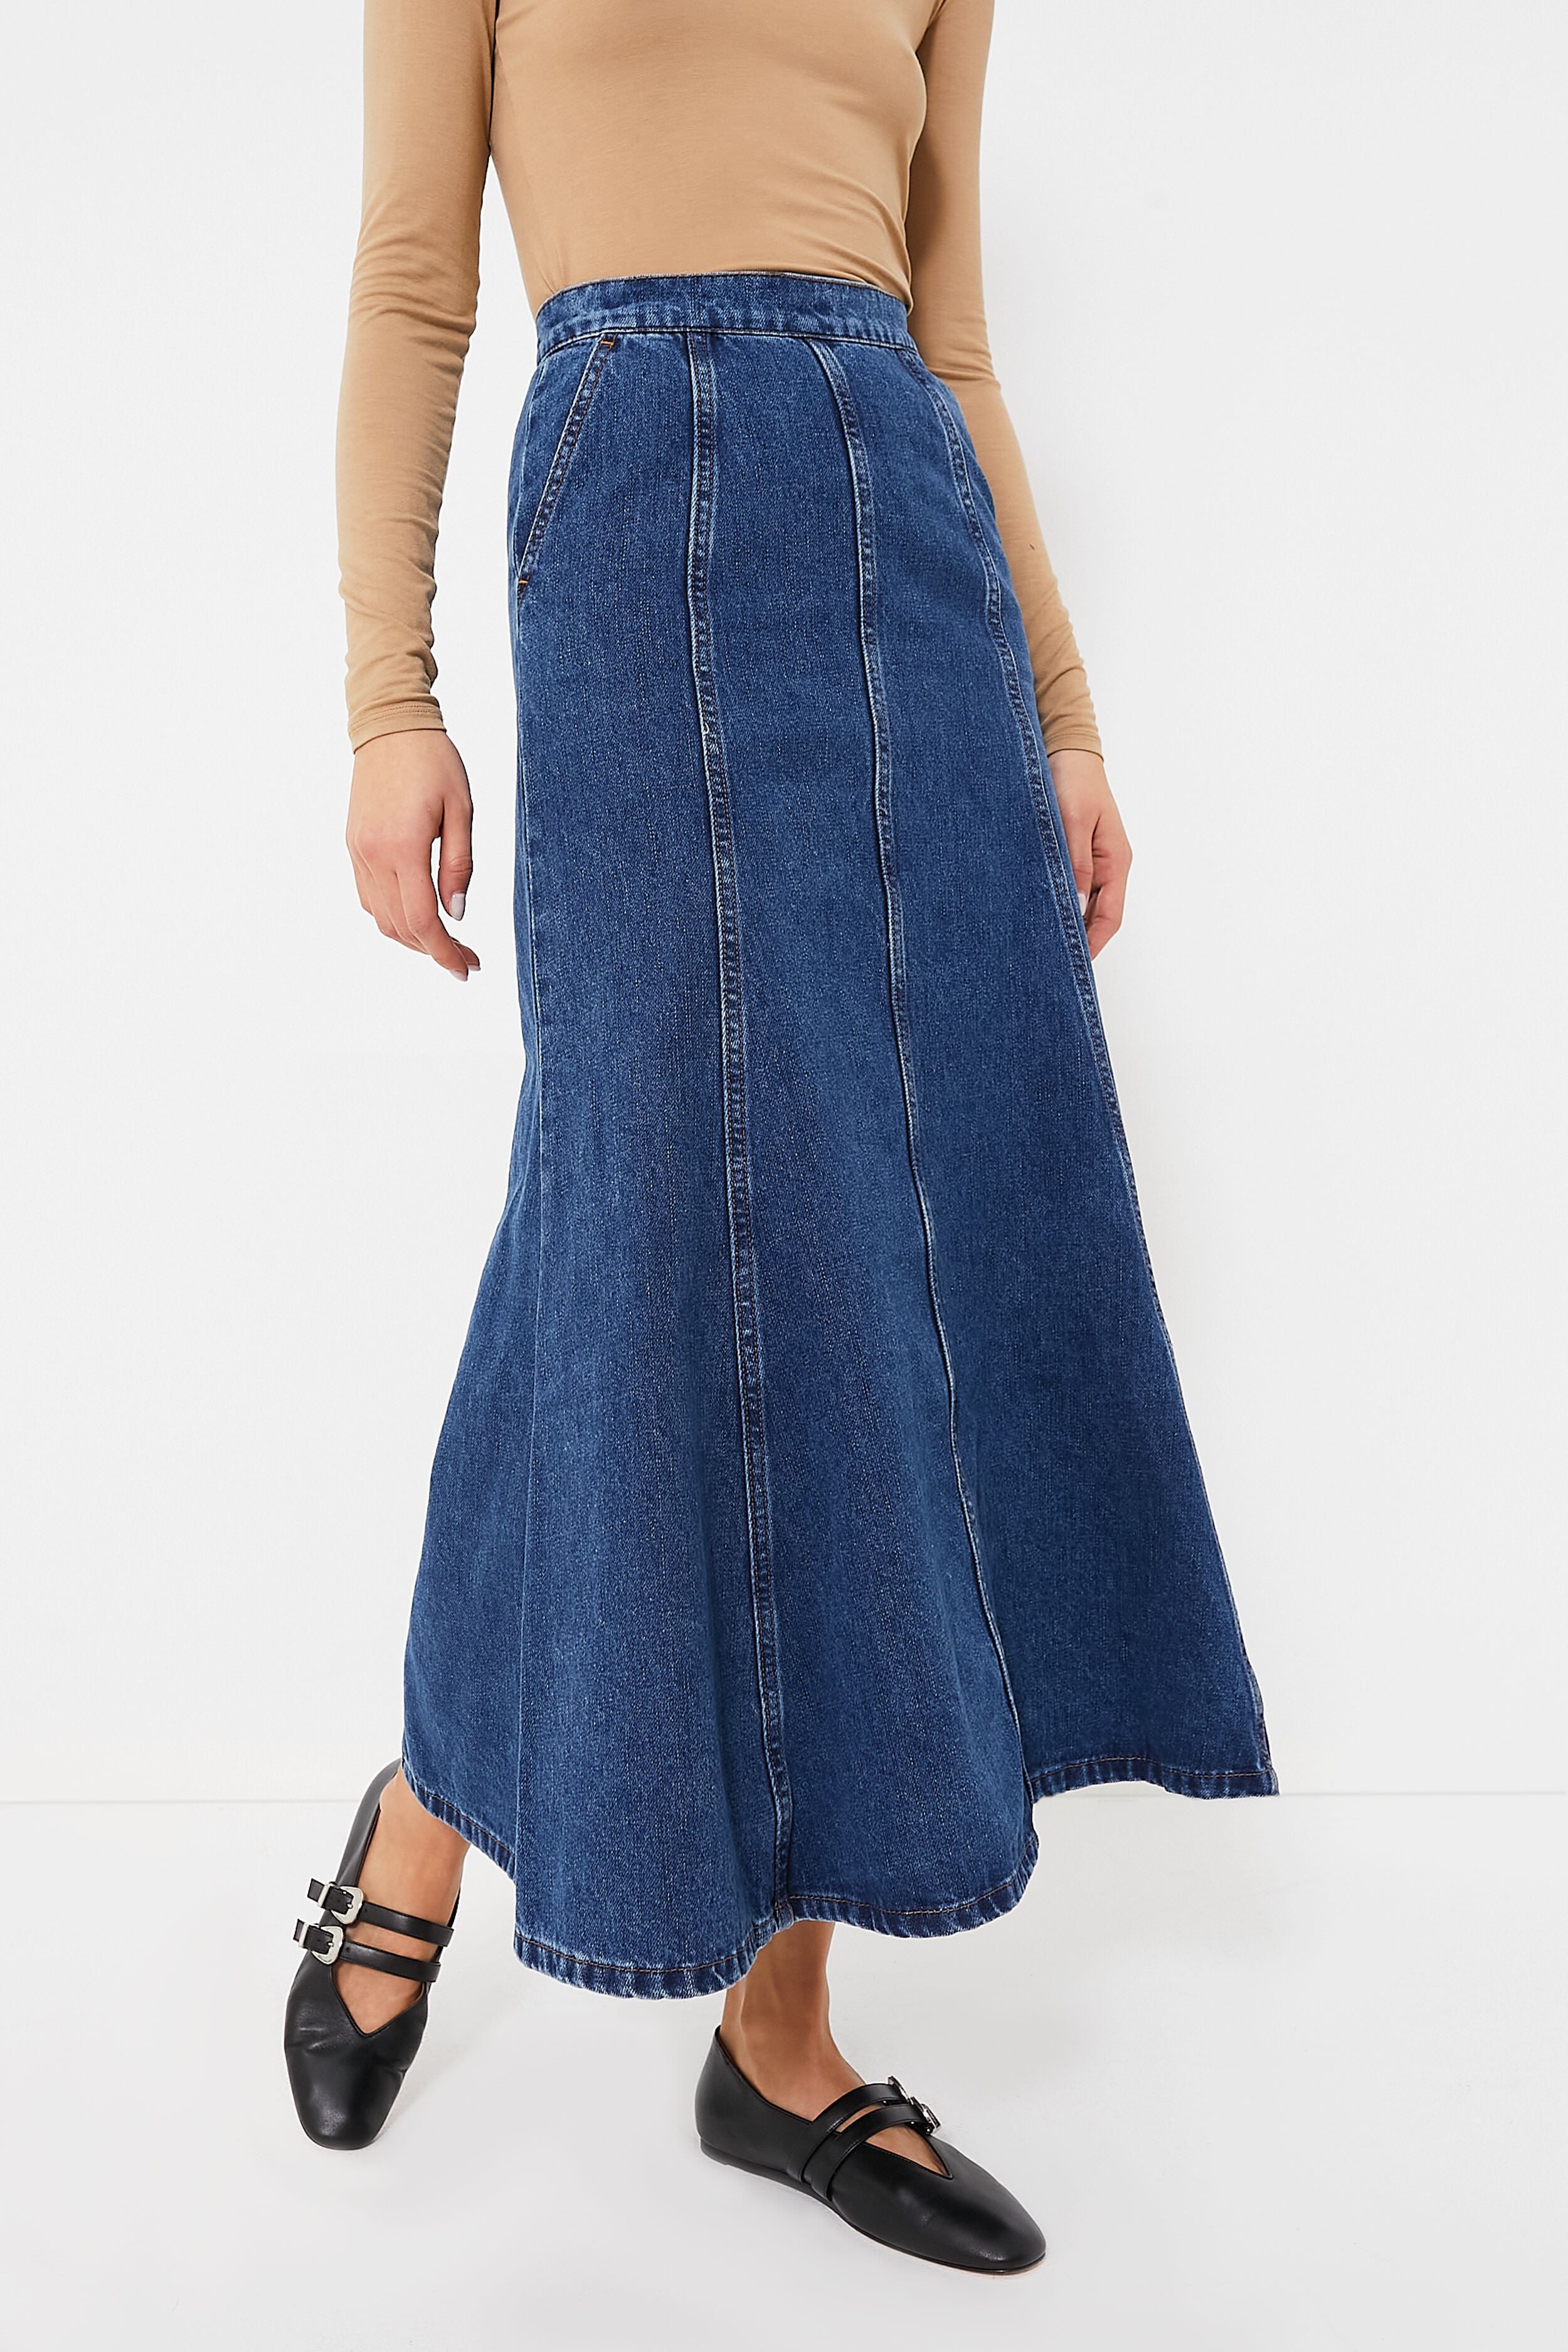 Jacquard Denim Skirt丨Urbanic | Most Favourite